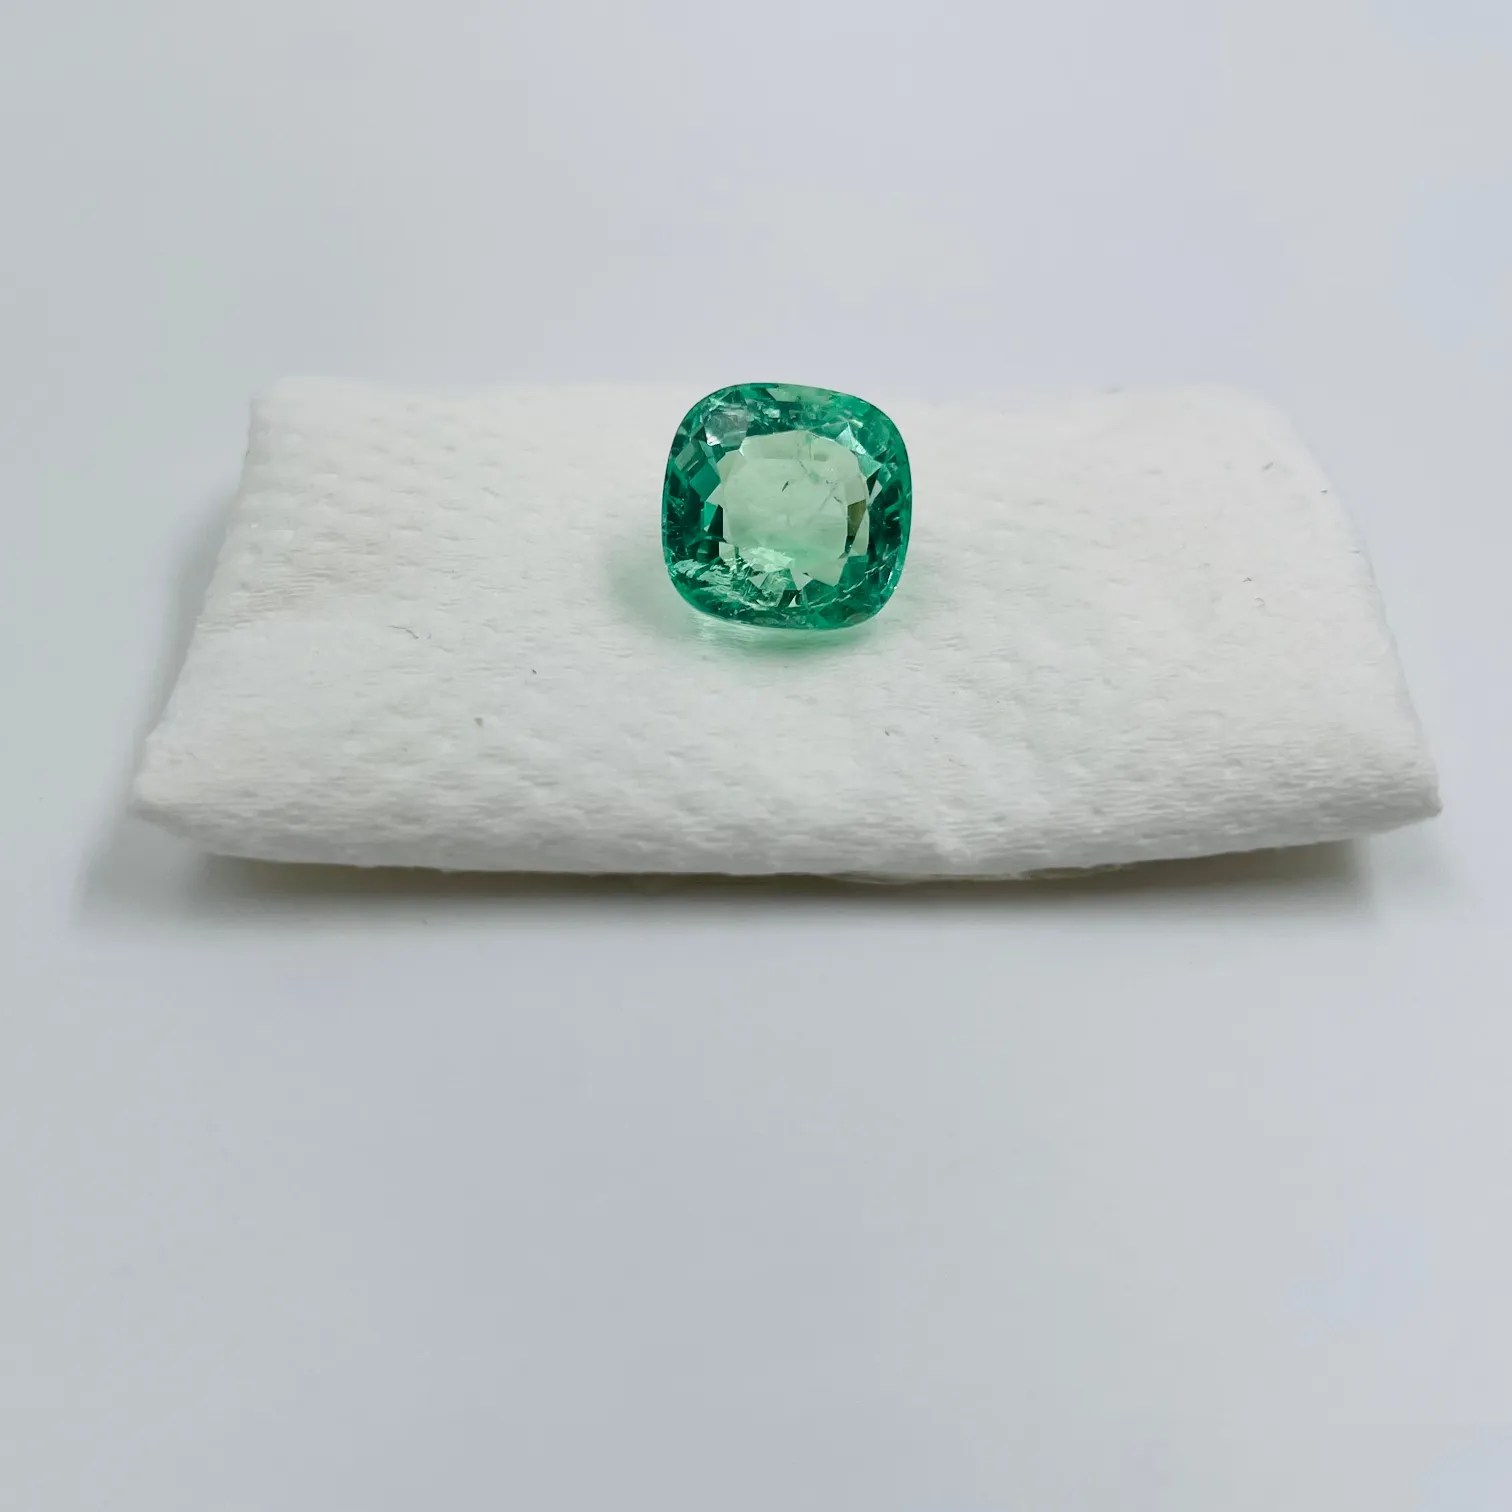 Almofada americana cortada 8.60carats, esmeralda de alta qualidade para anel, bijuteria